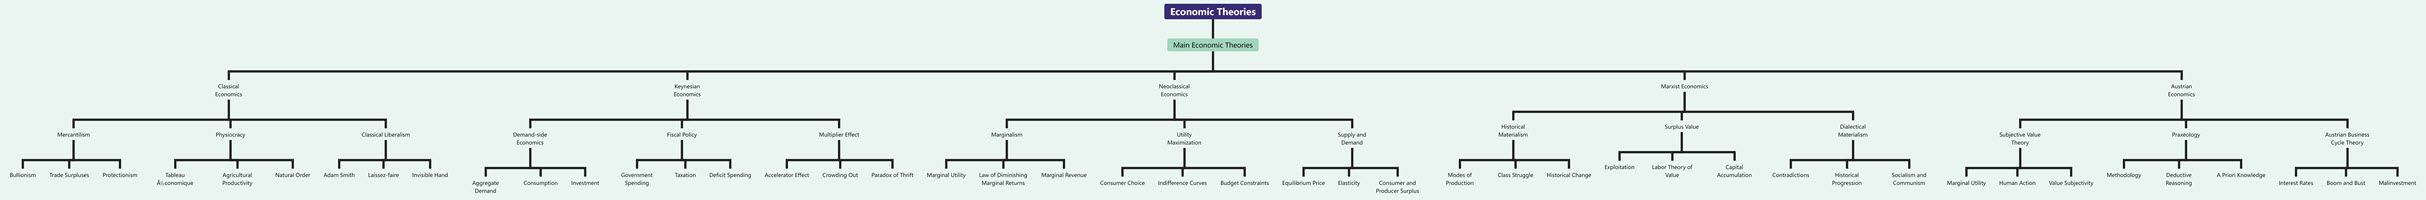 Tree Chart of Economic Theories